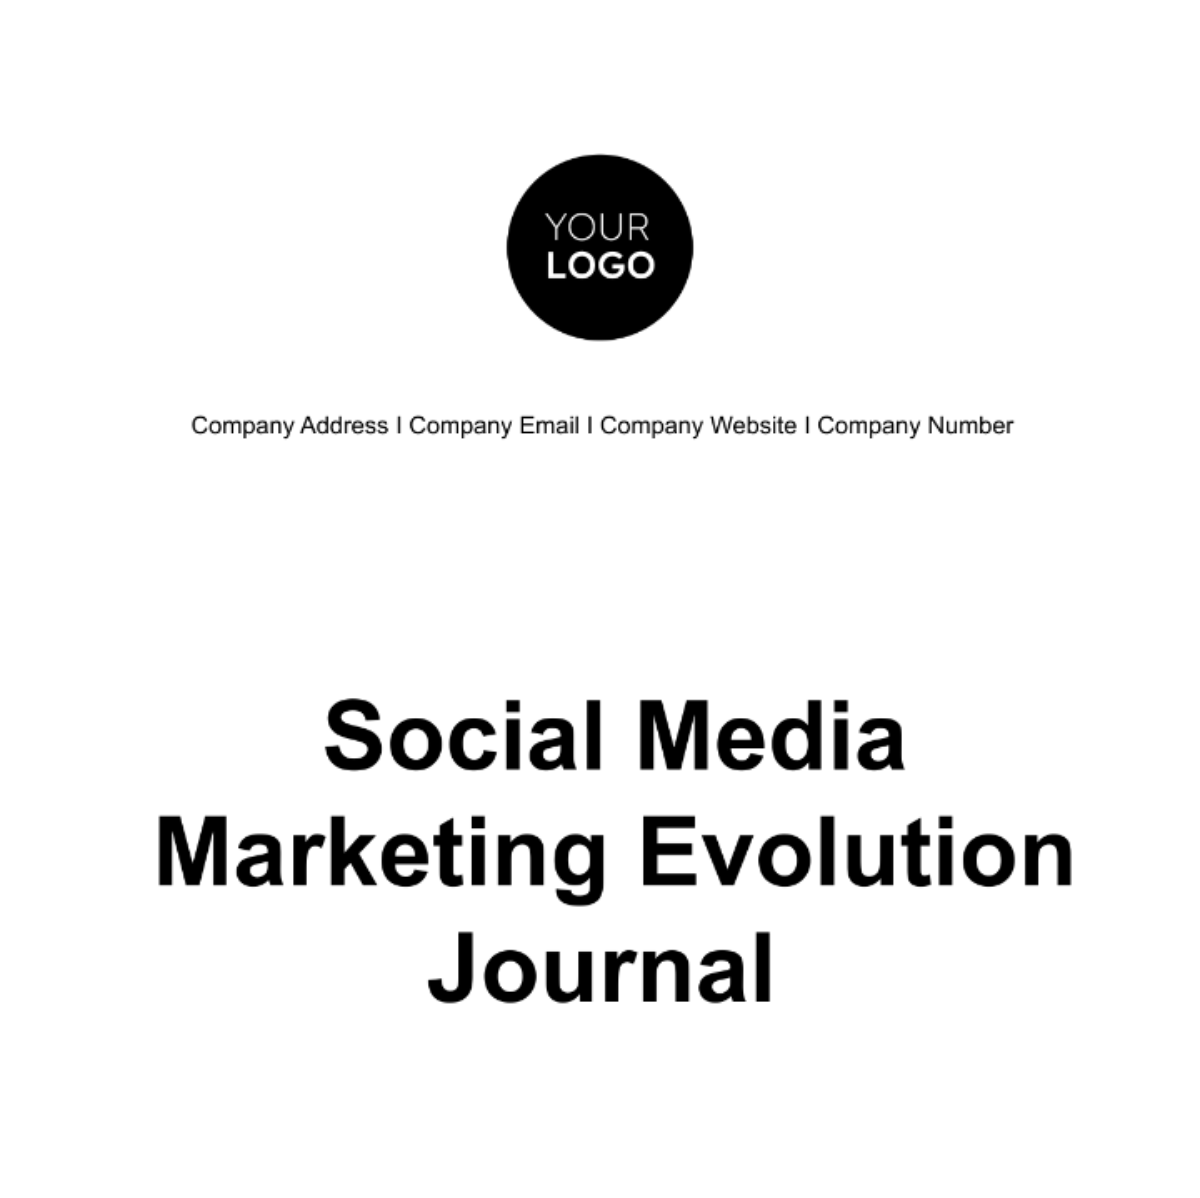 Social Media Marketing Evolution Journal Template